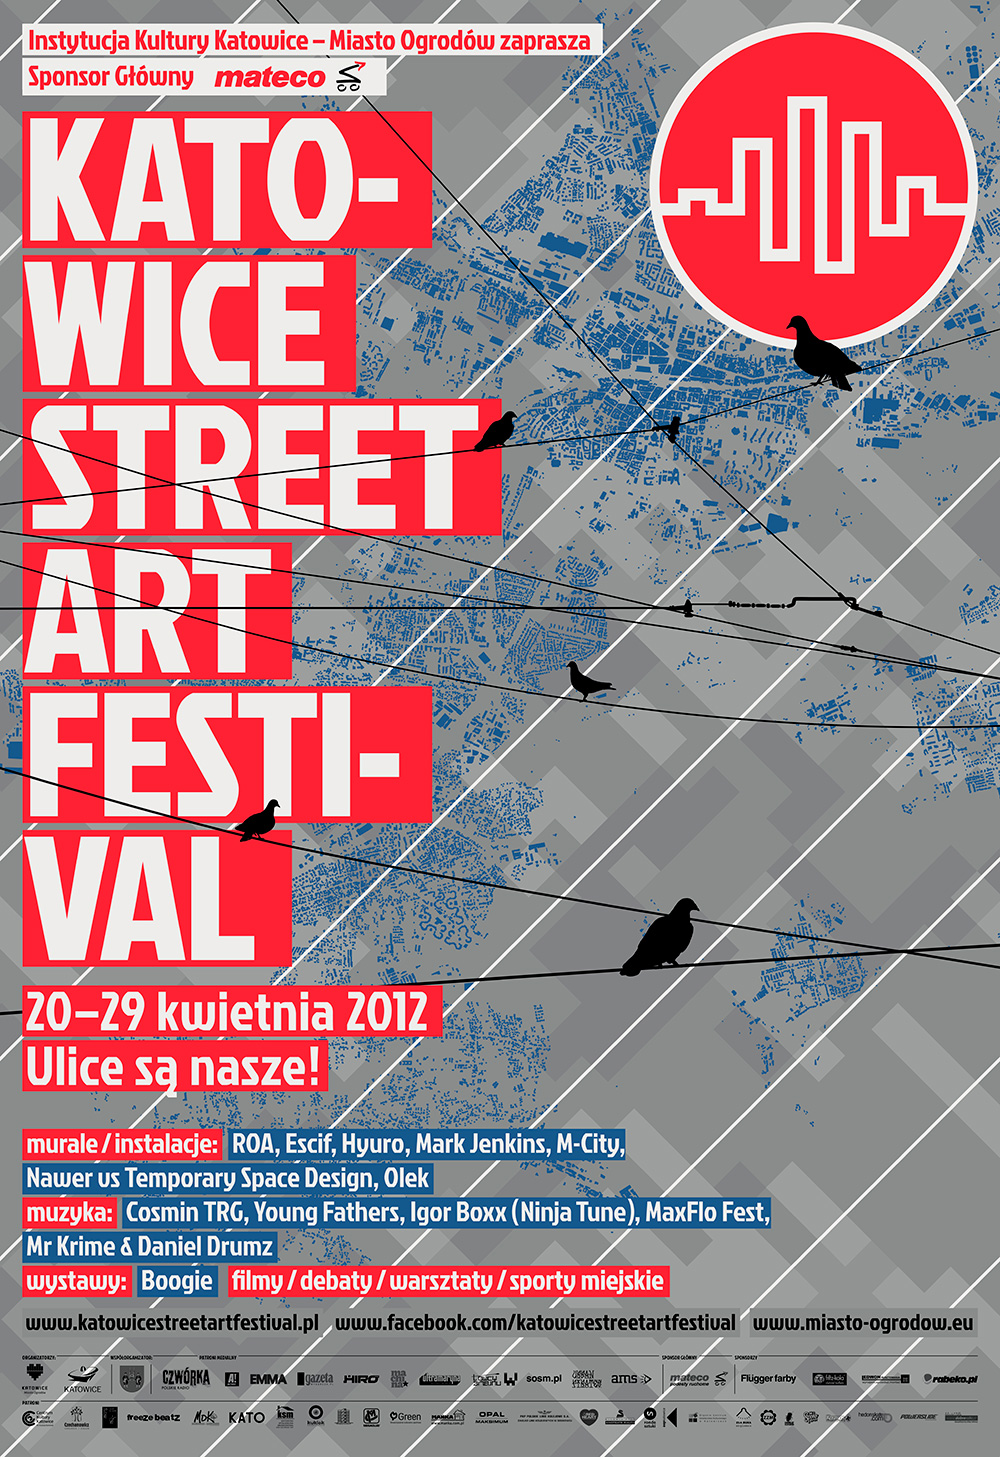 Katowice Street Art Festival, od 20 do 29 kwietnia 2012